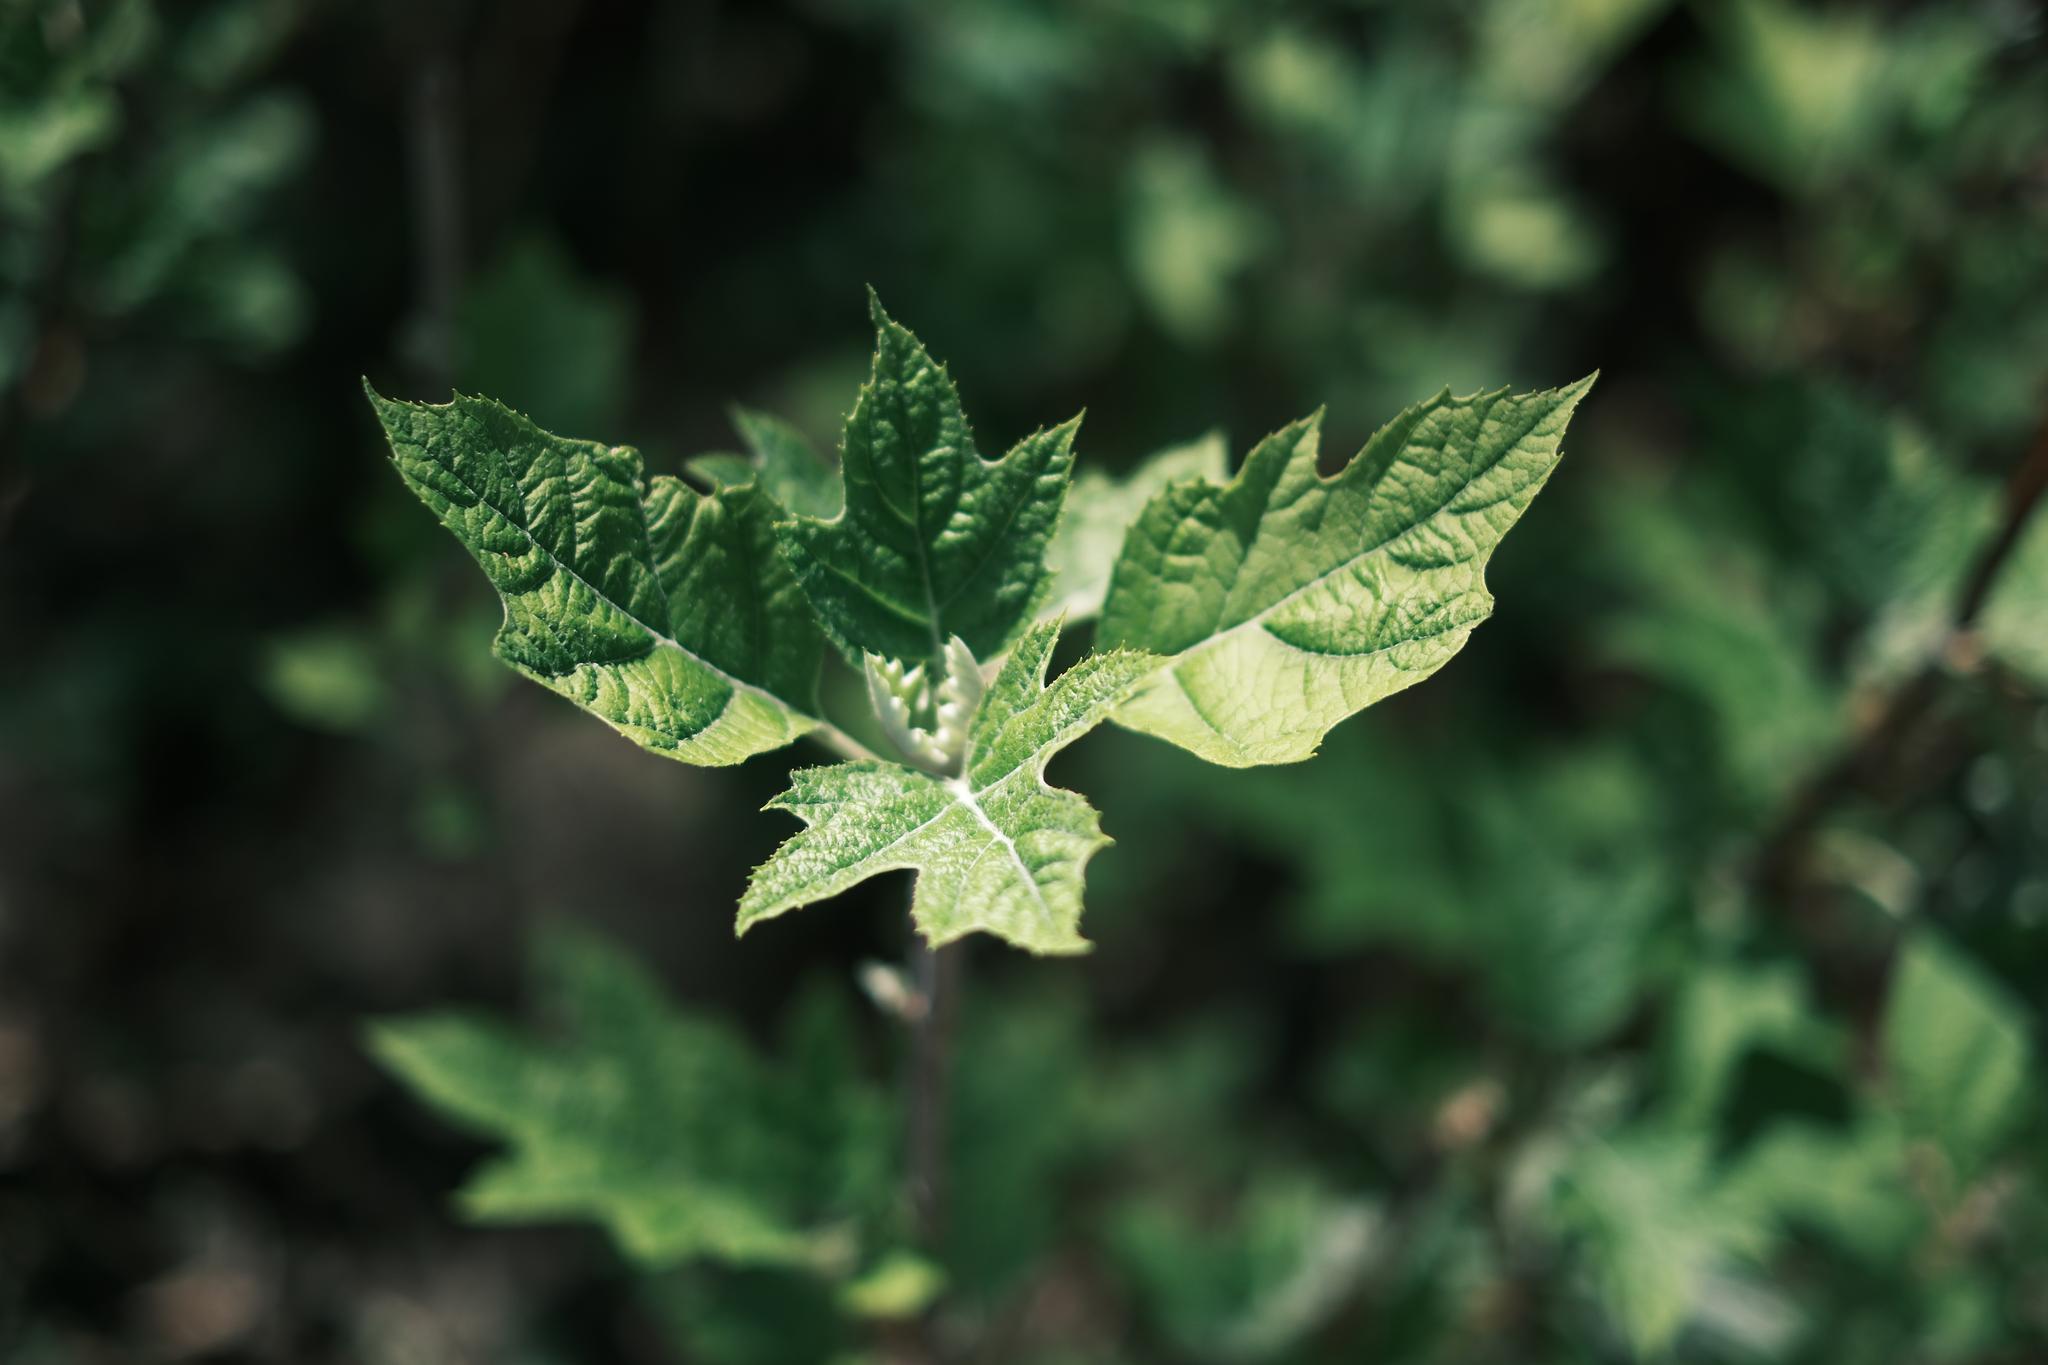 A variegated green leaf against a blurred natural background